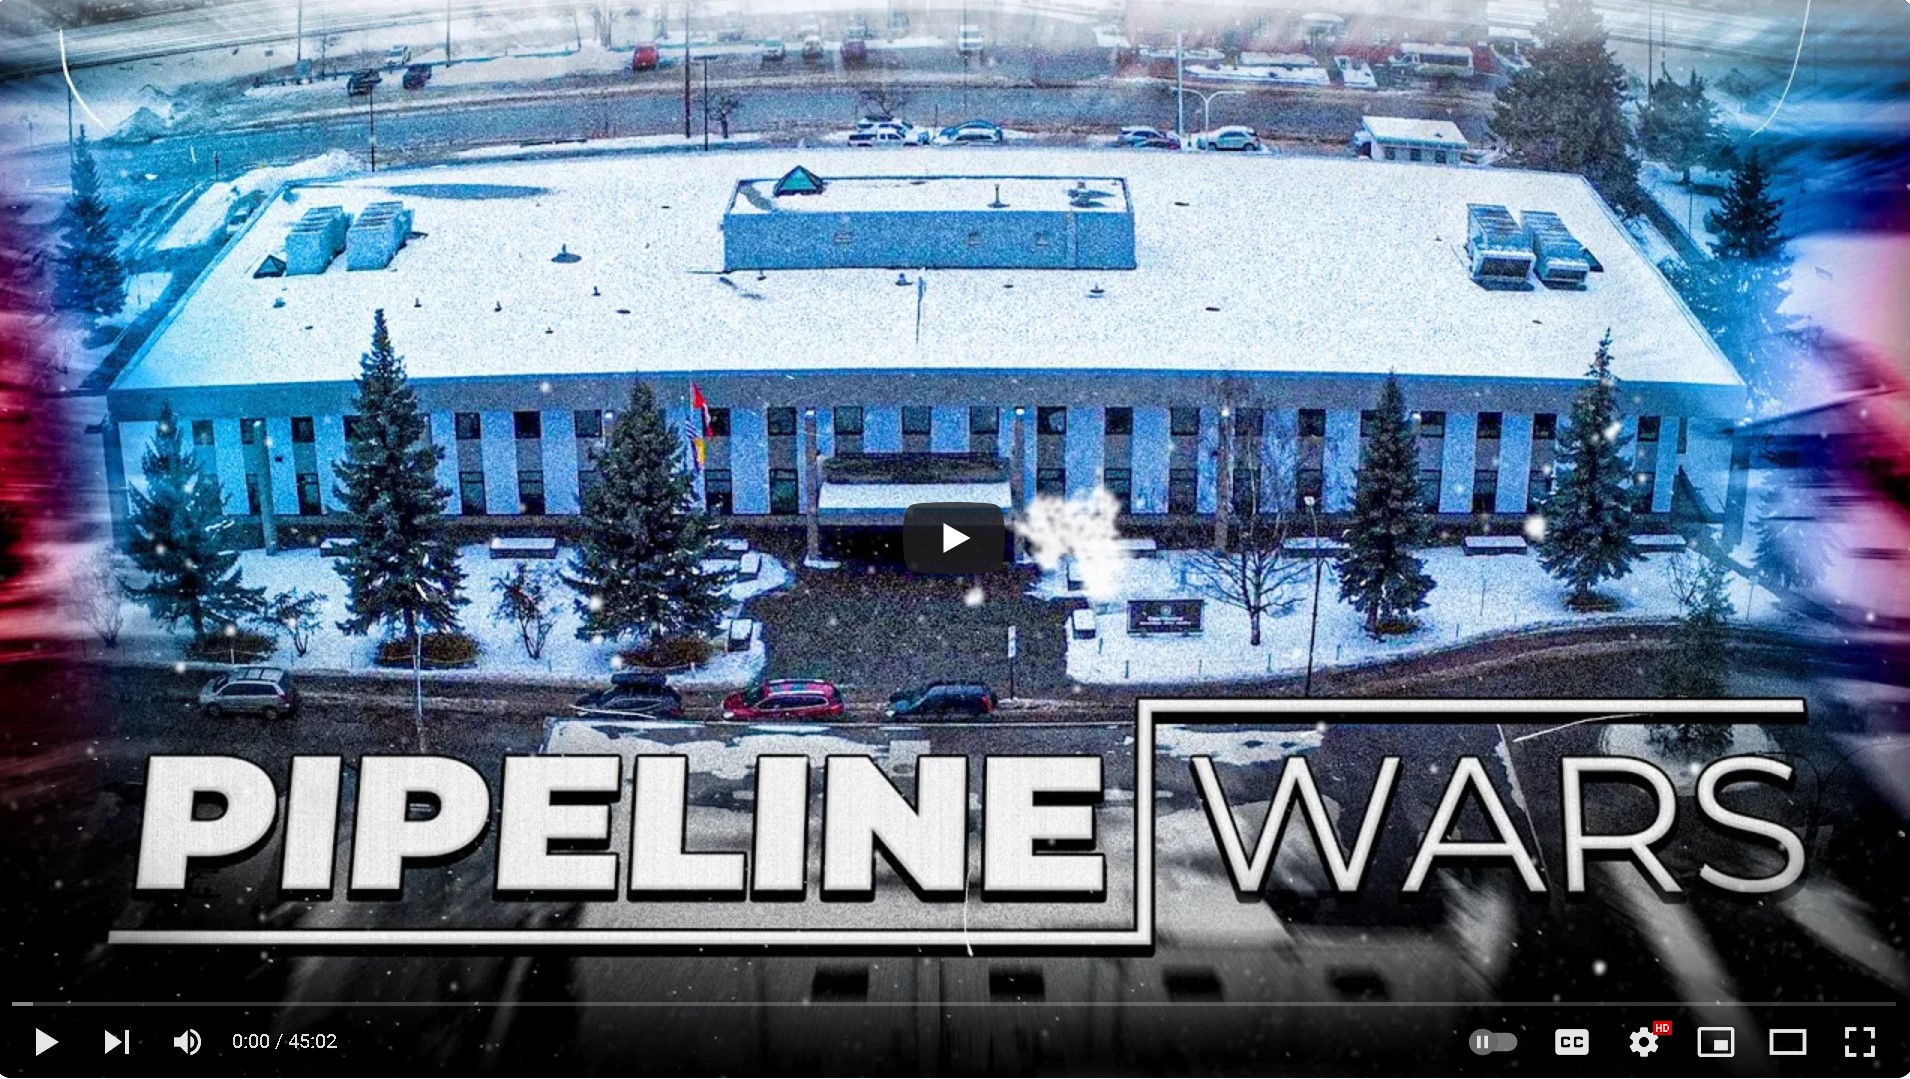 Goverment complicit in “Terrorism” – Pipeline Wars